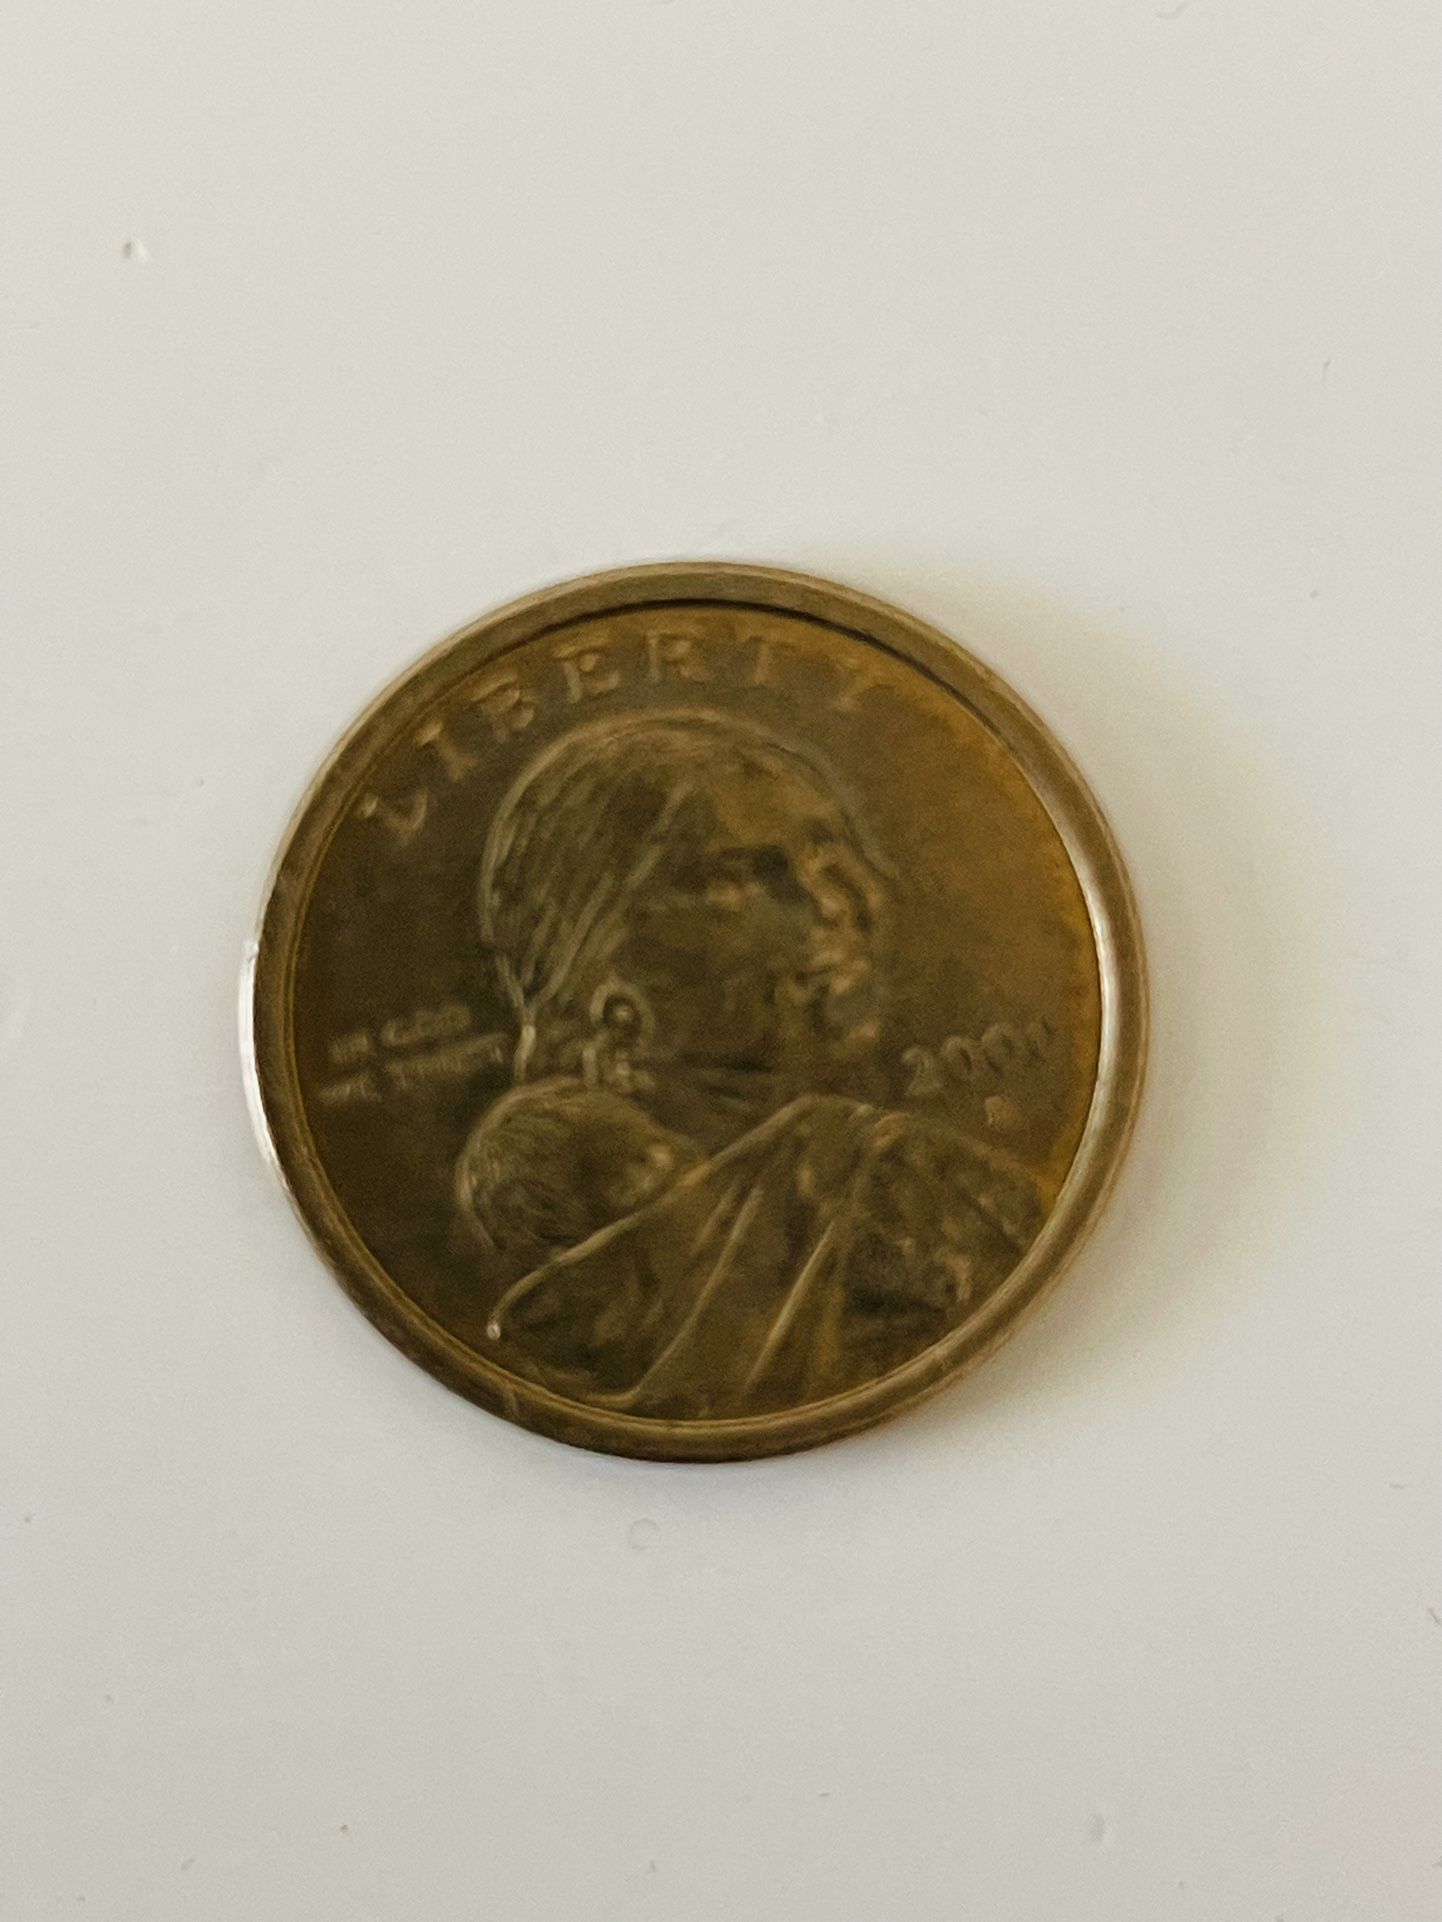 2000 D SACAGAWEA ONE DOLLAR COIN US LIBERTY GOLD COLOR CIRCULATED 